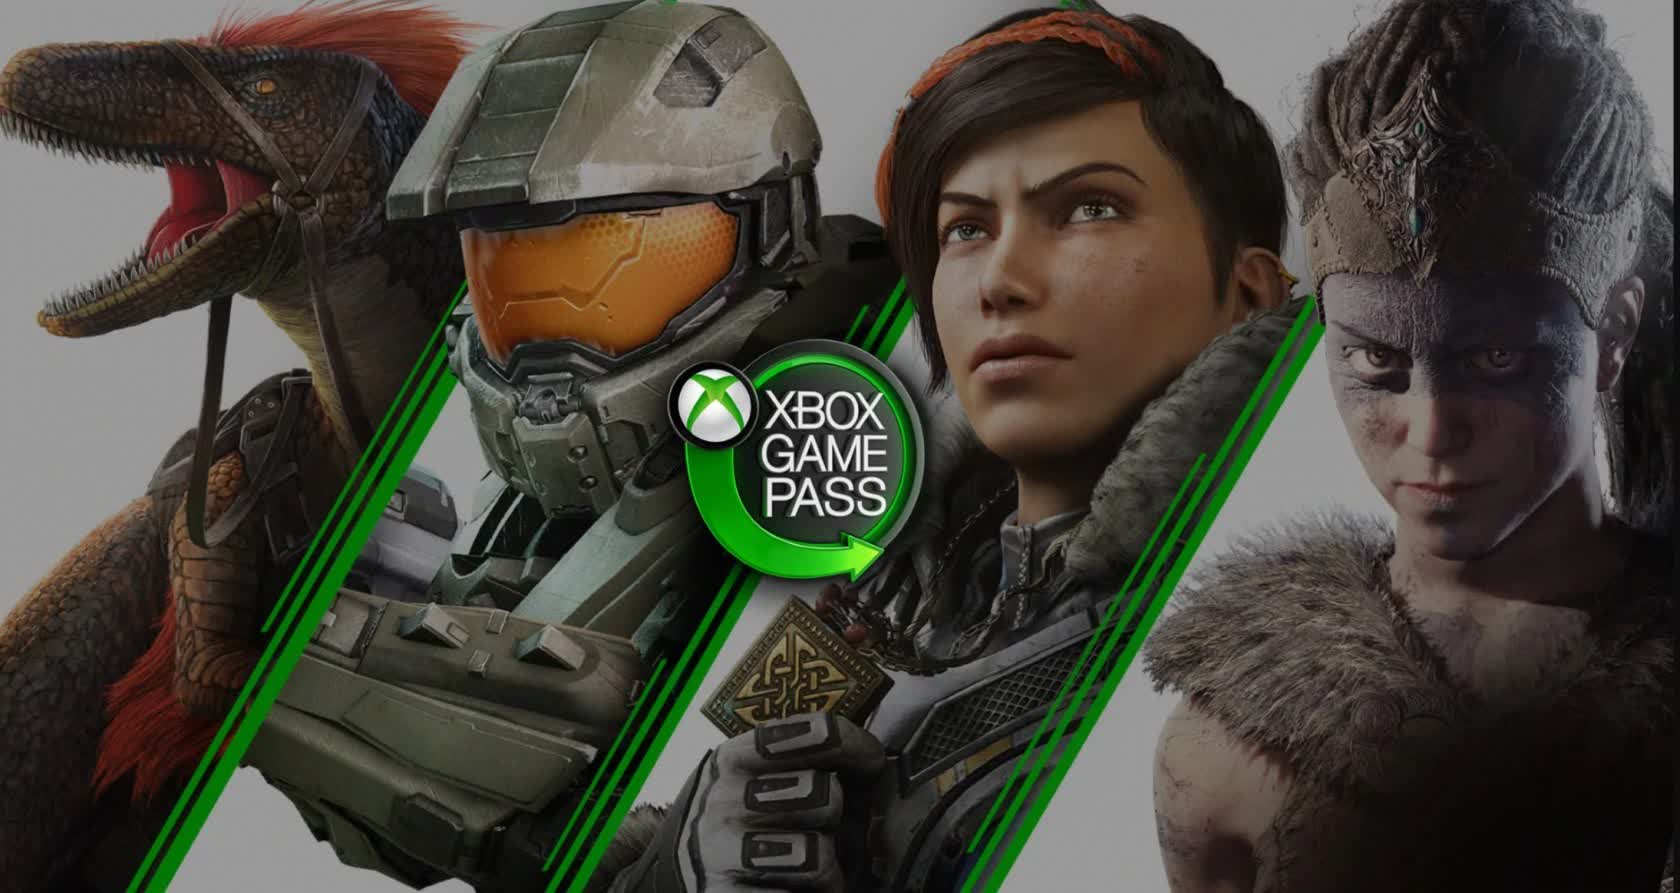 Microsoft may be preparing an Xbox Game Pass family plan